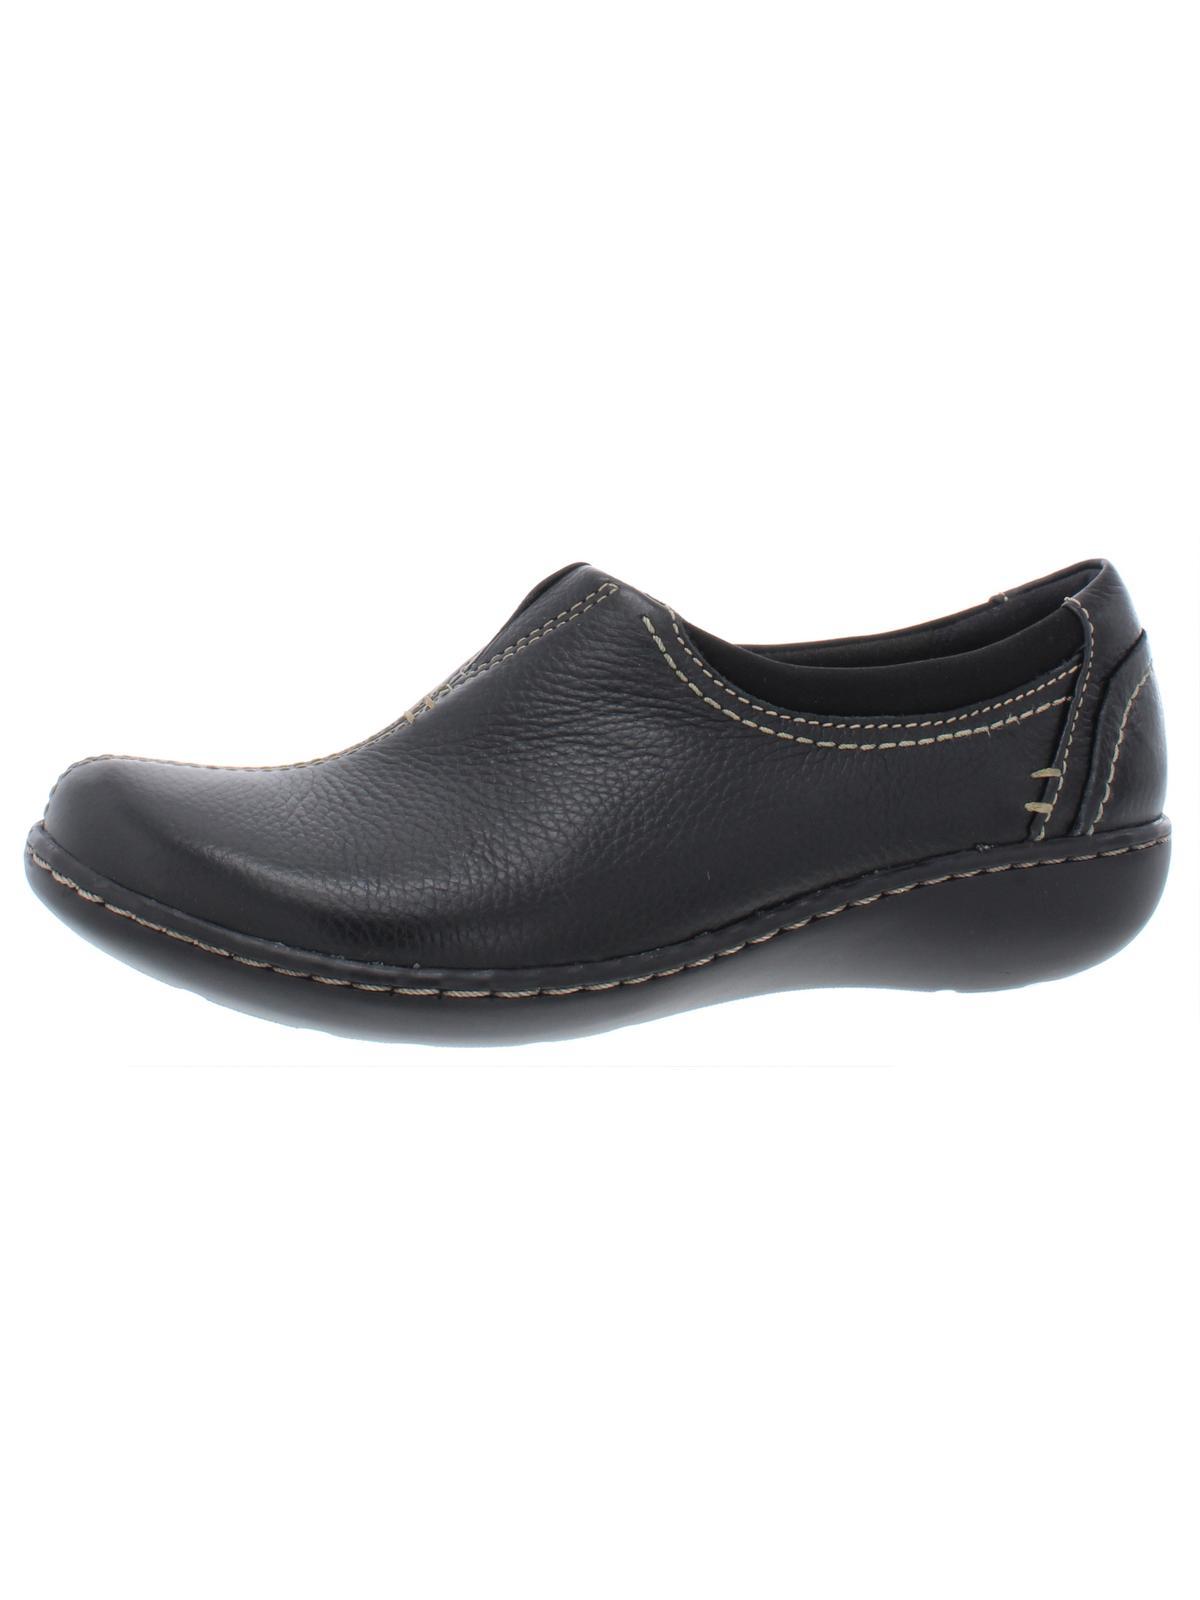 Clarks Ashland Joy Leather Slip On Loafers in Black | Lyst